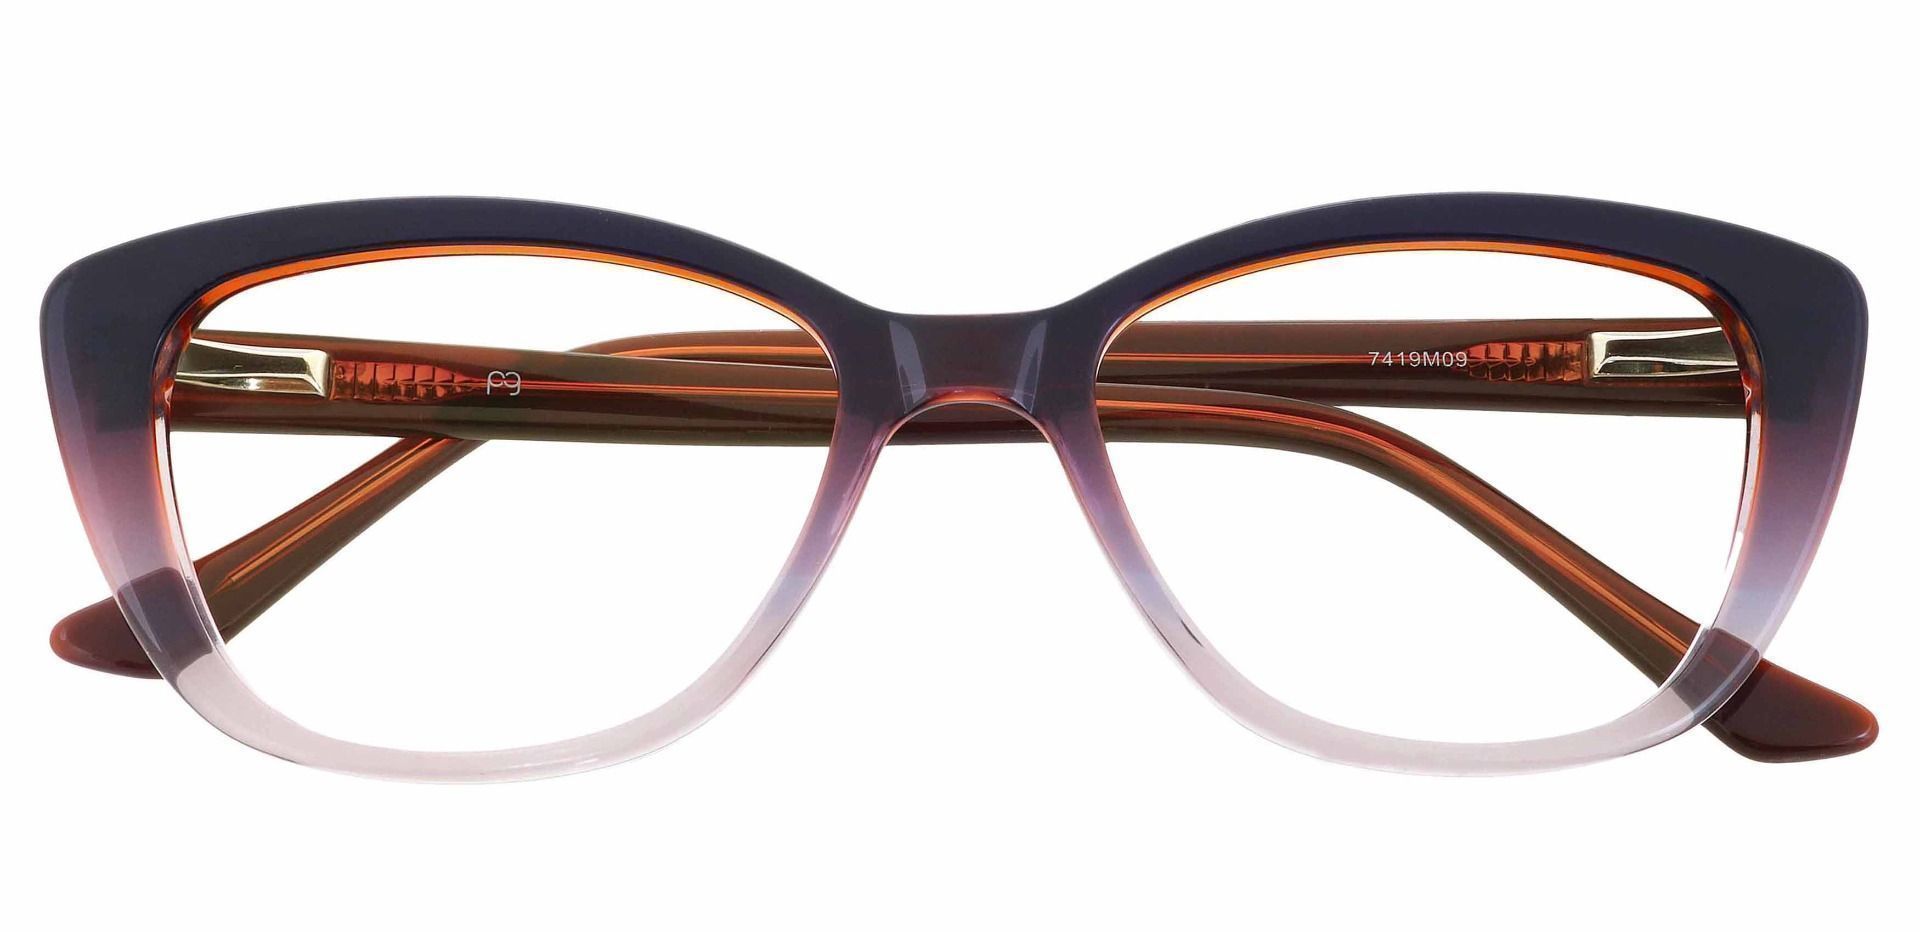 Athena Cat-Eye Eyeglasses Frame - Multi Color